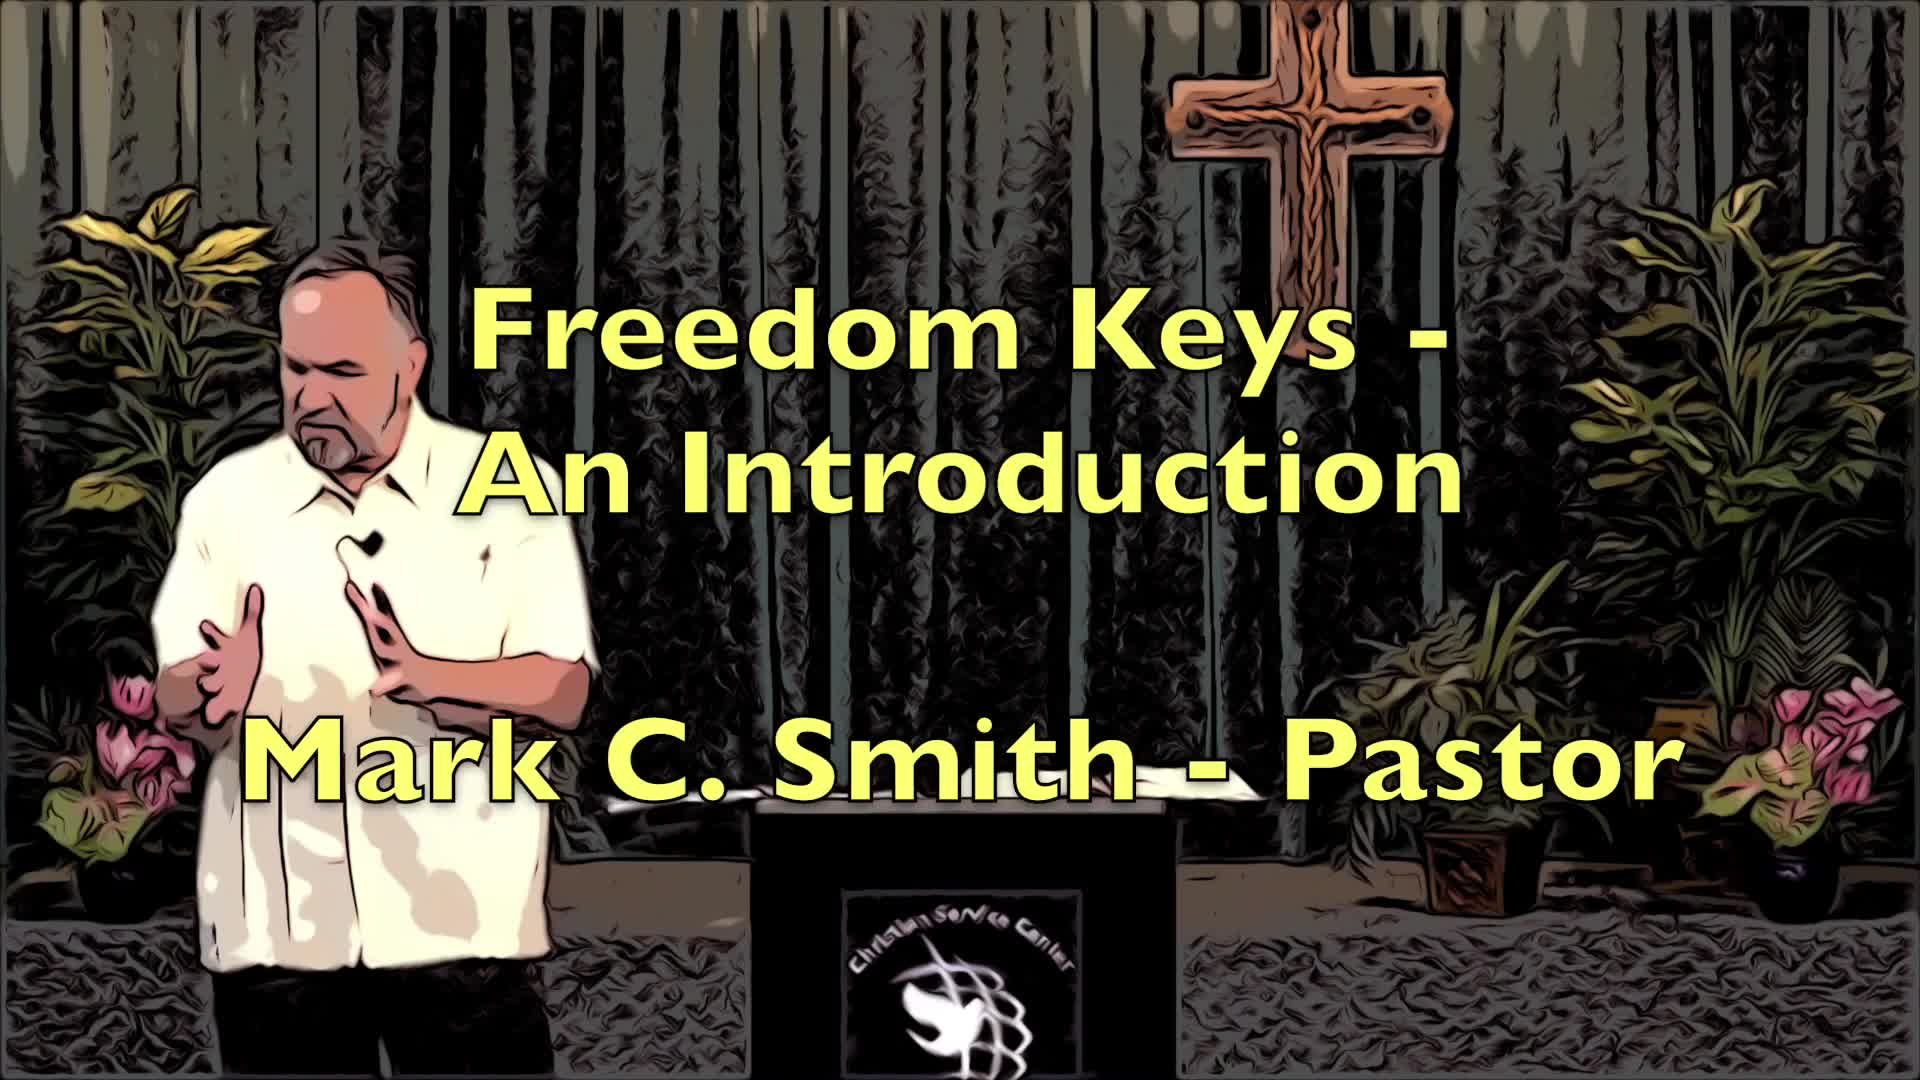 Freedom Keys - An Introduction